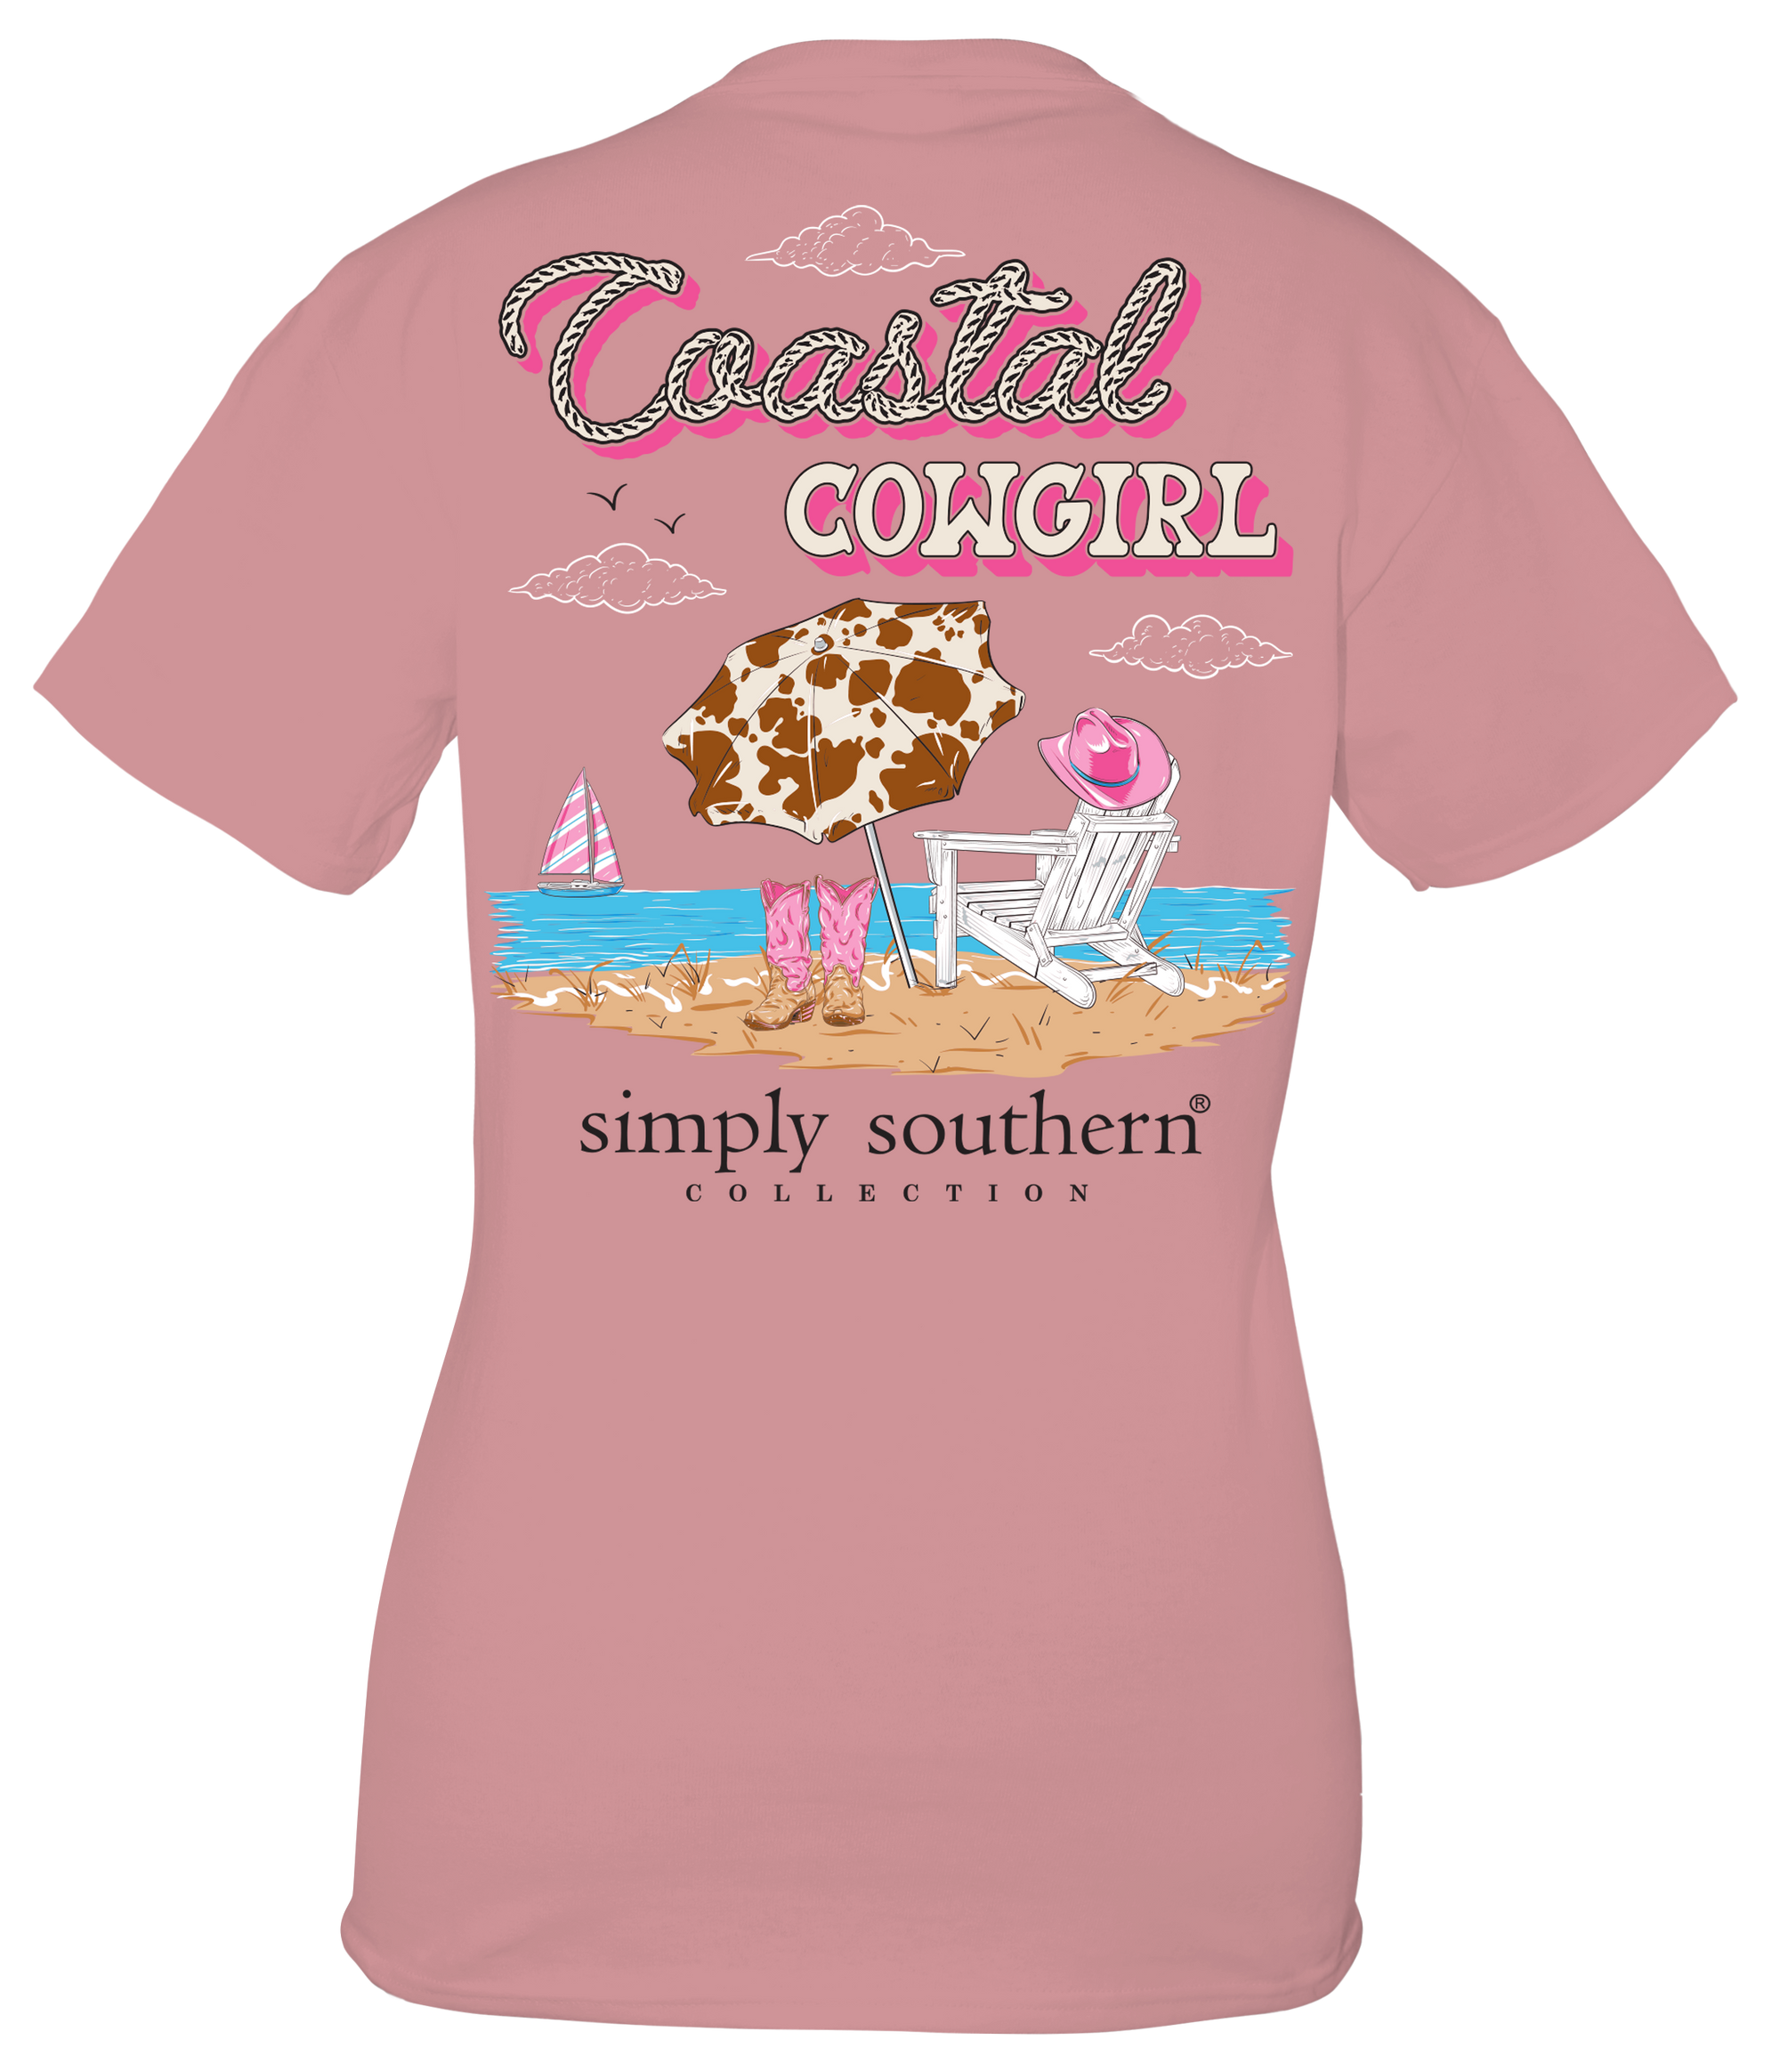 Simply Southern Coastal Cowgirl Beach T-Shirt